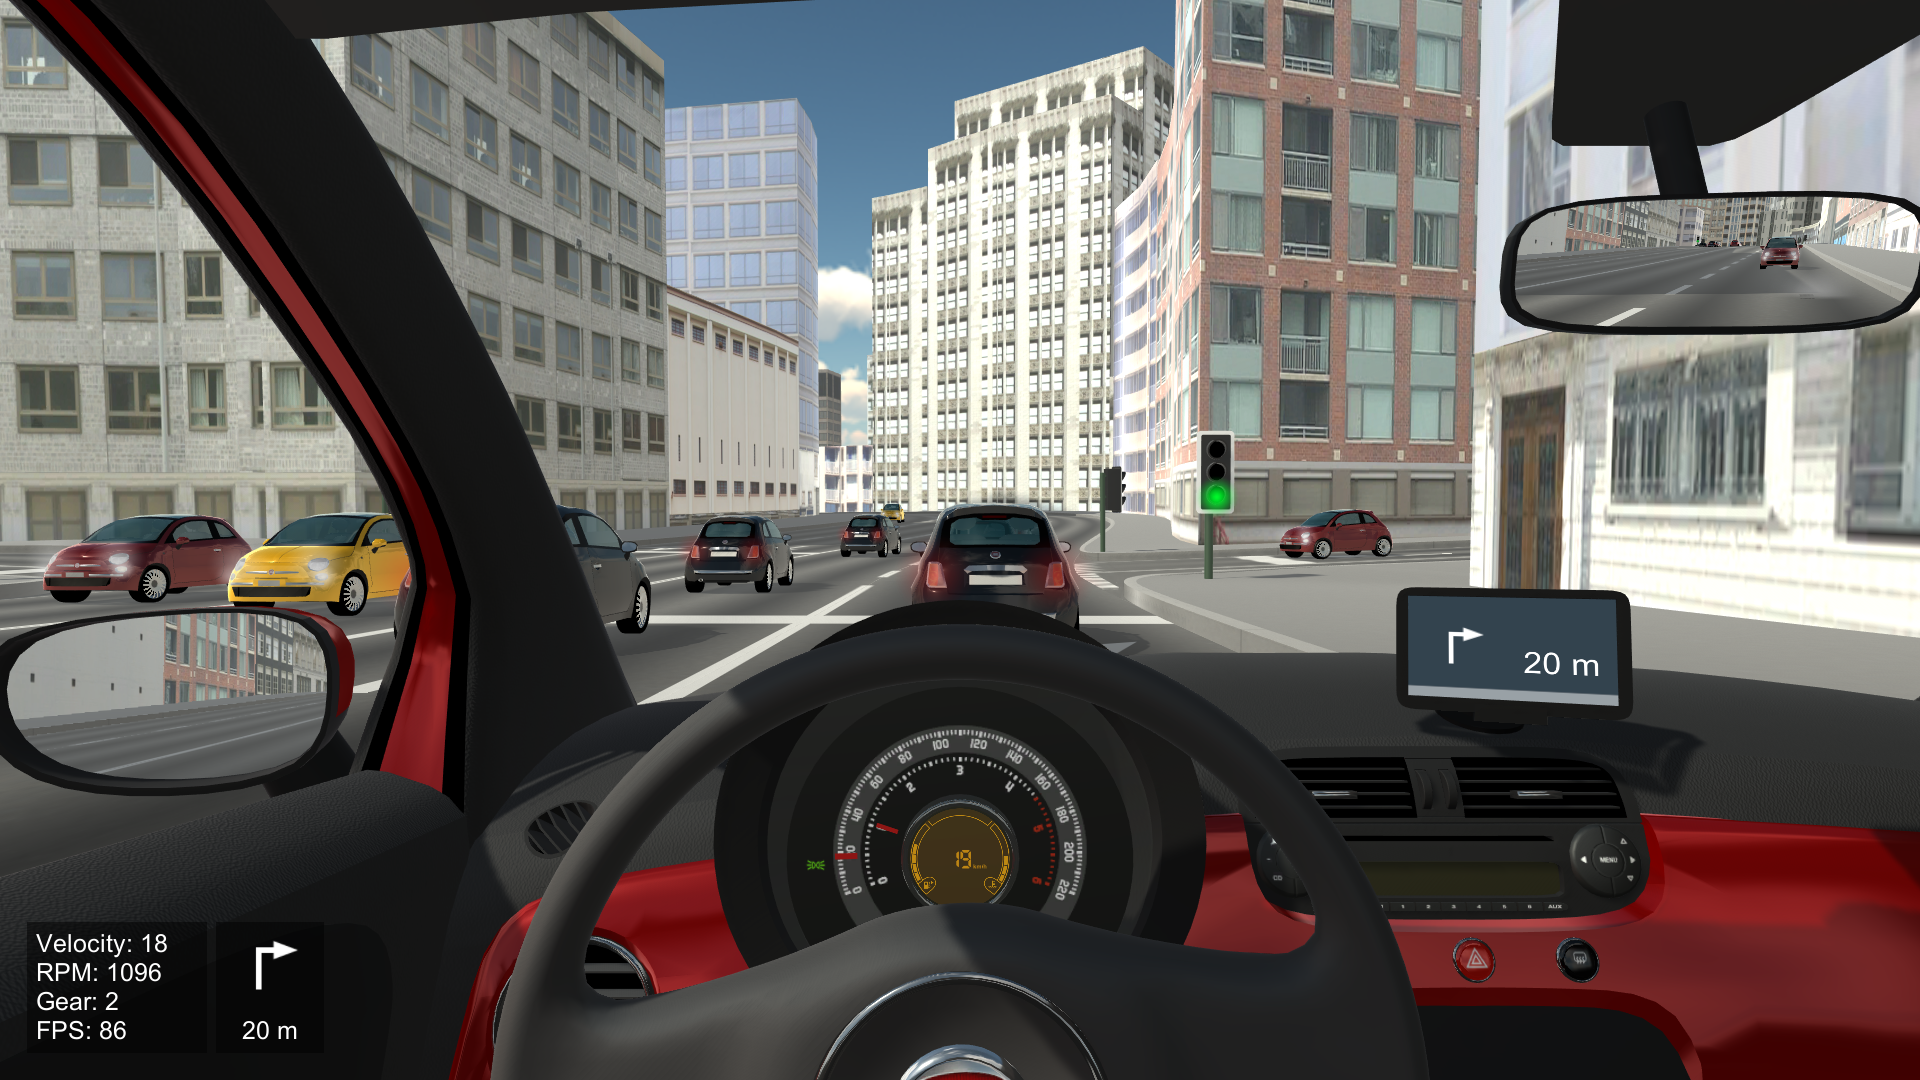 Illustrative image of driving simulator